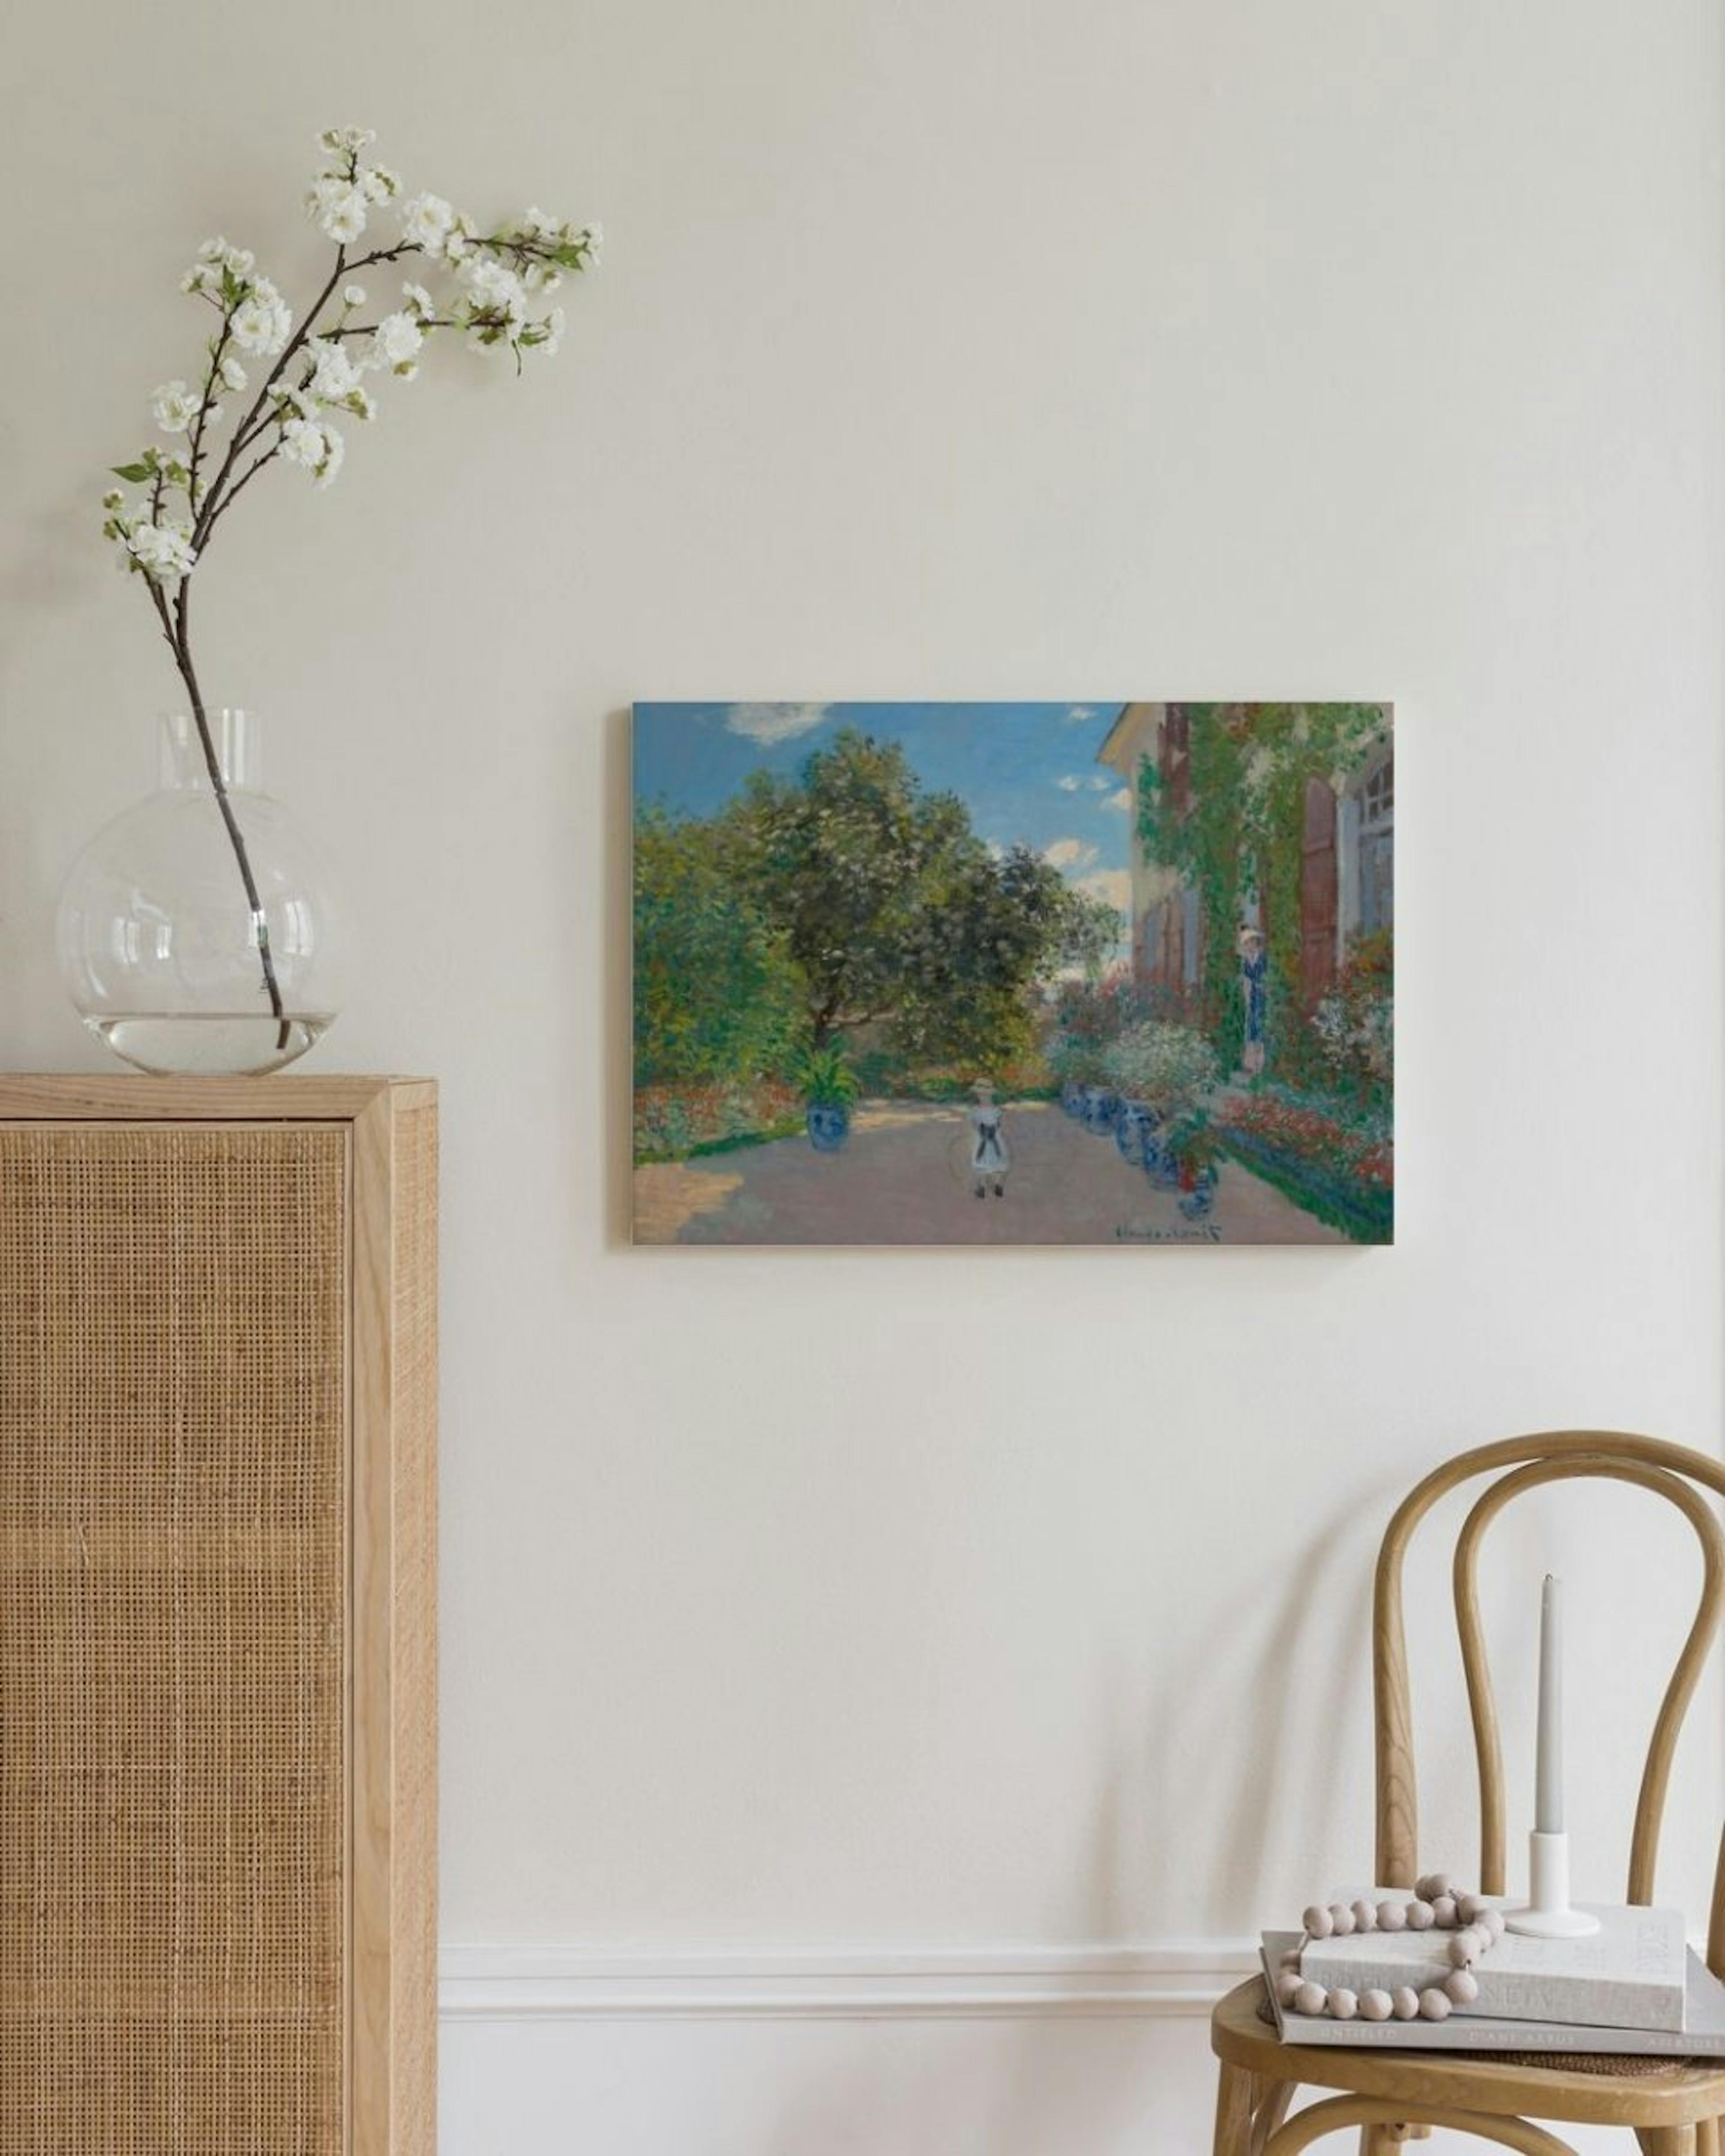 Monet - The Artist’s House at Argenteuil quadro em tela